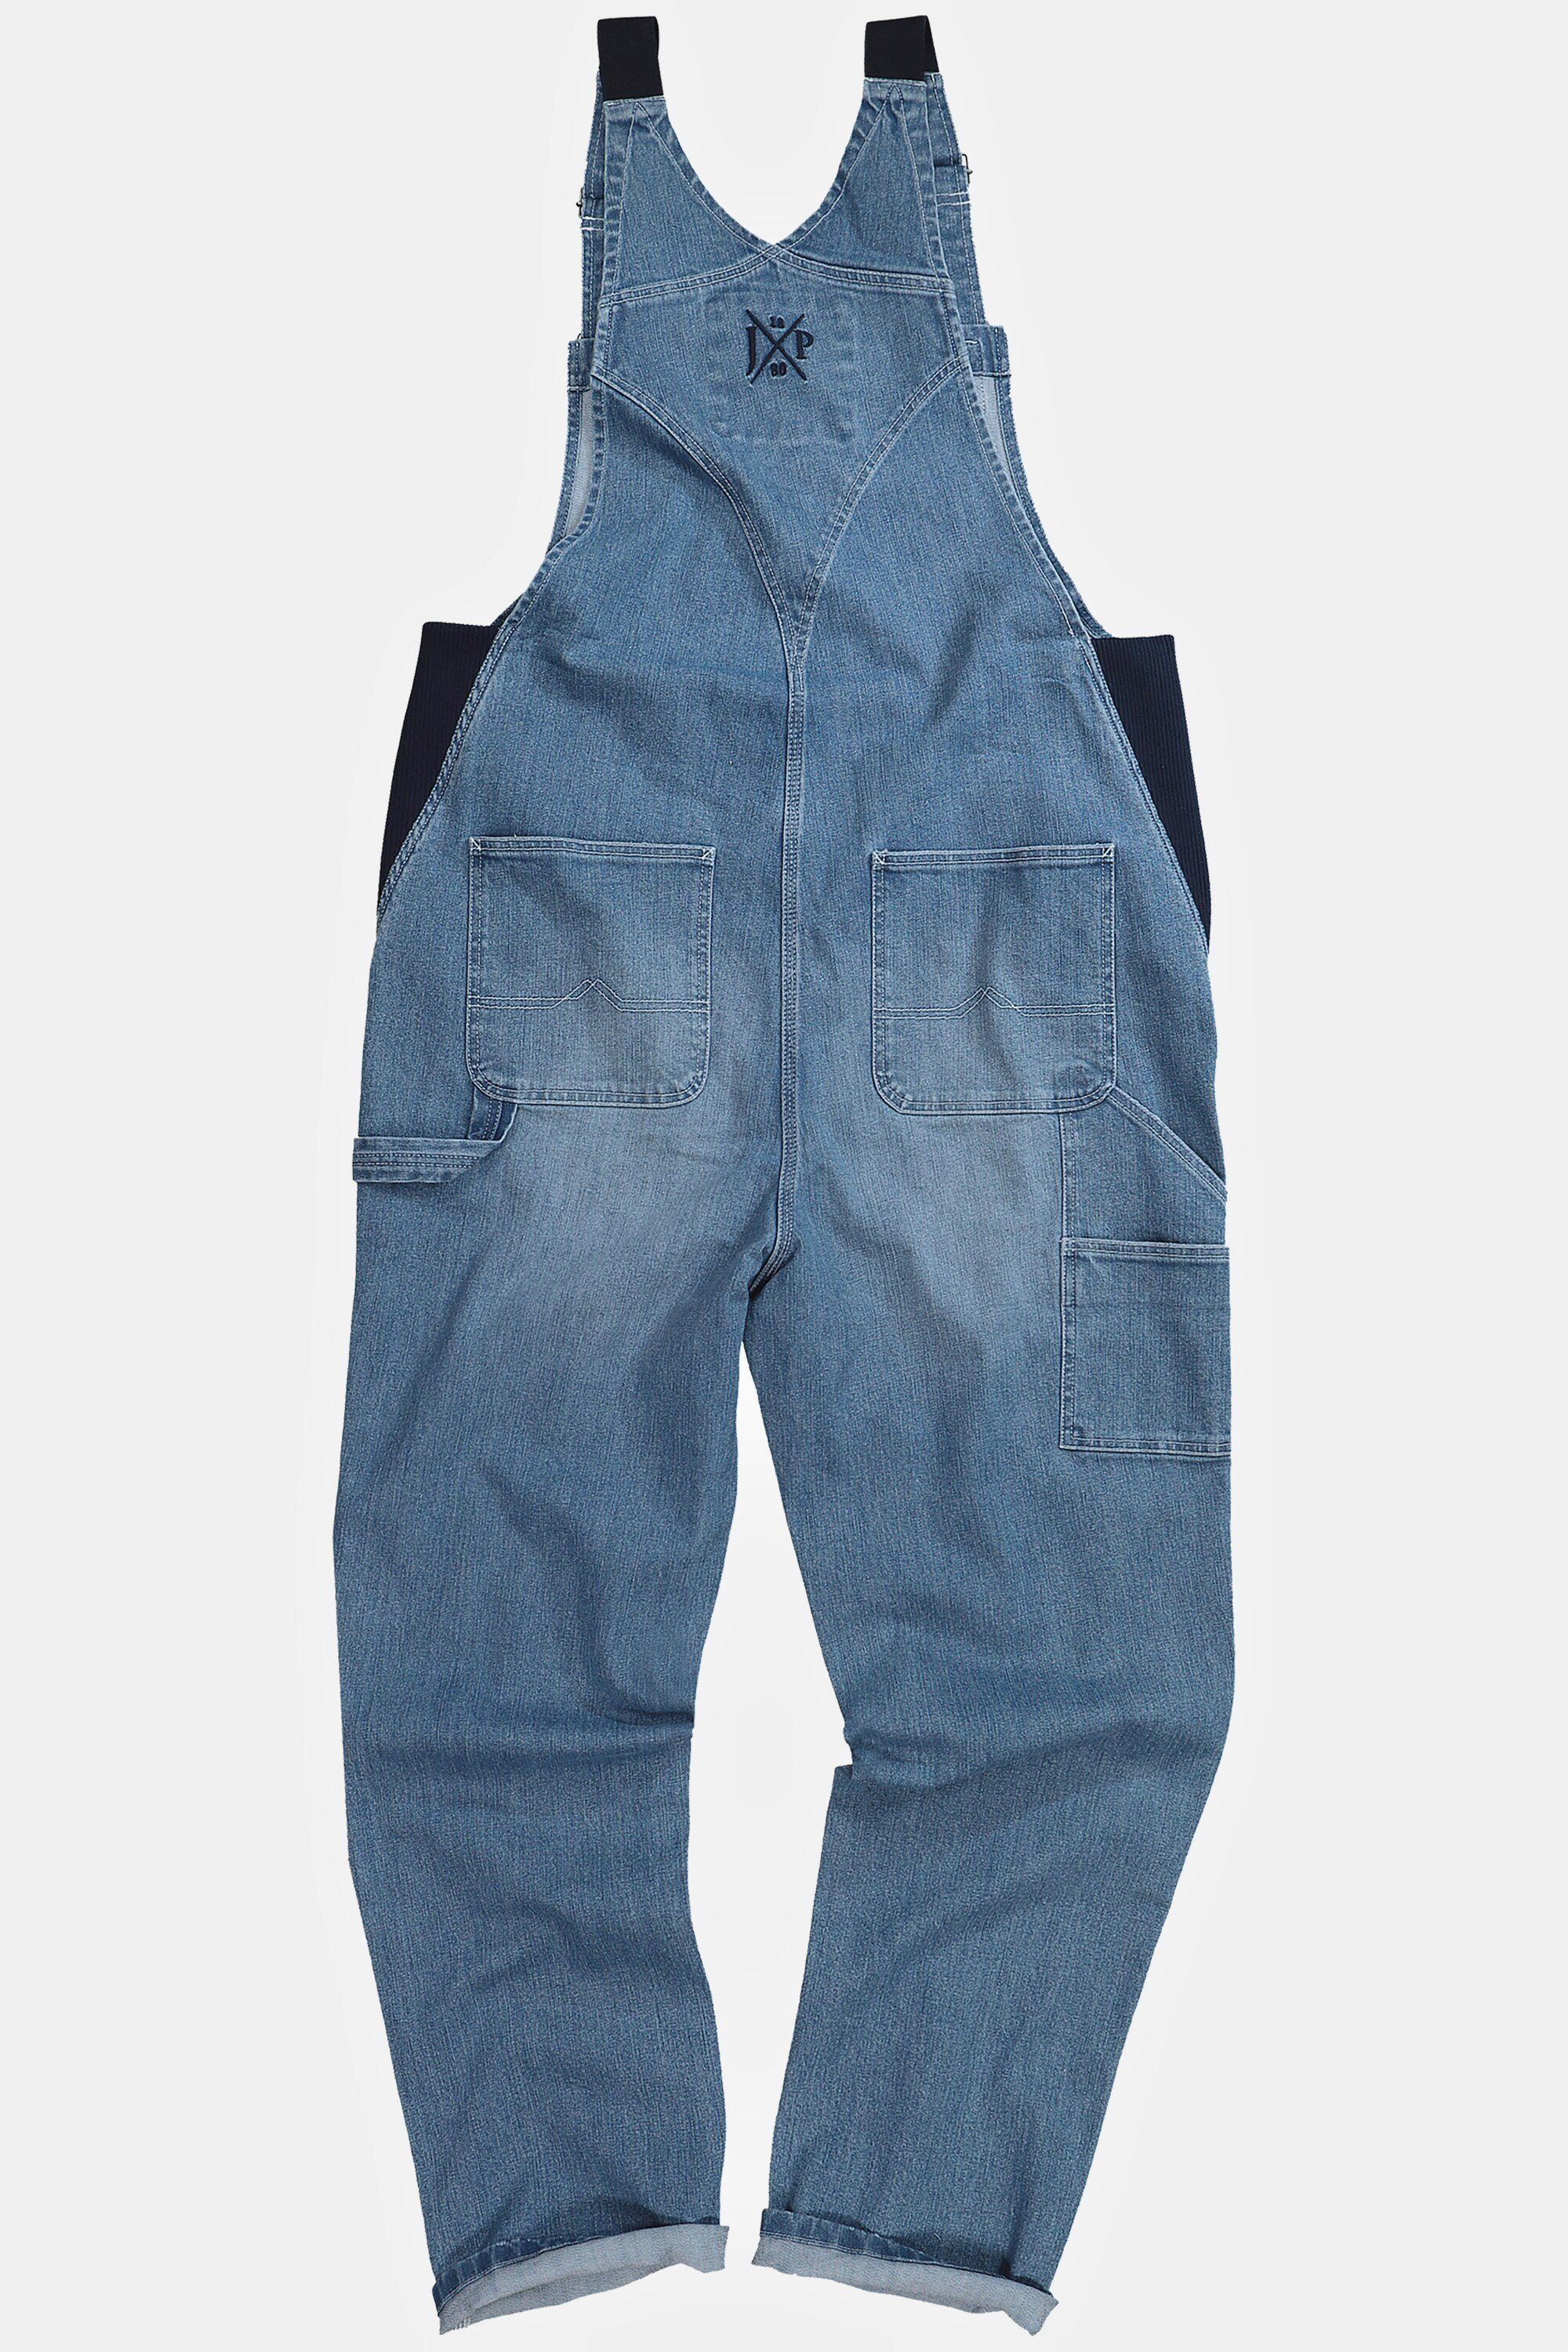 Workwear blue Fit Cargohose light viele JP1880 Latzhose Jeans Relaxed Taschen